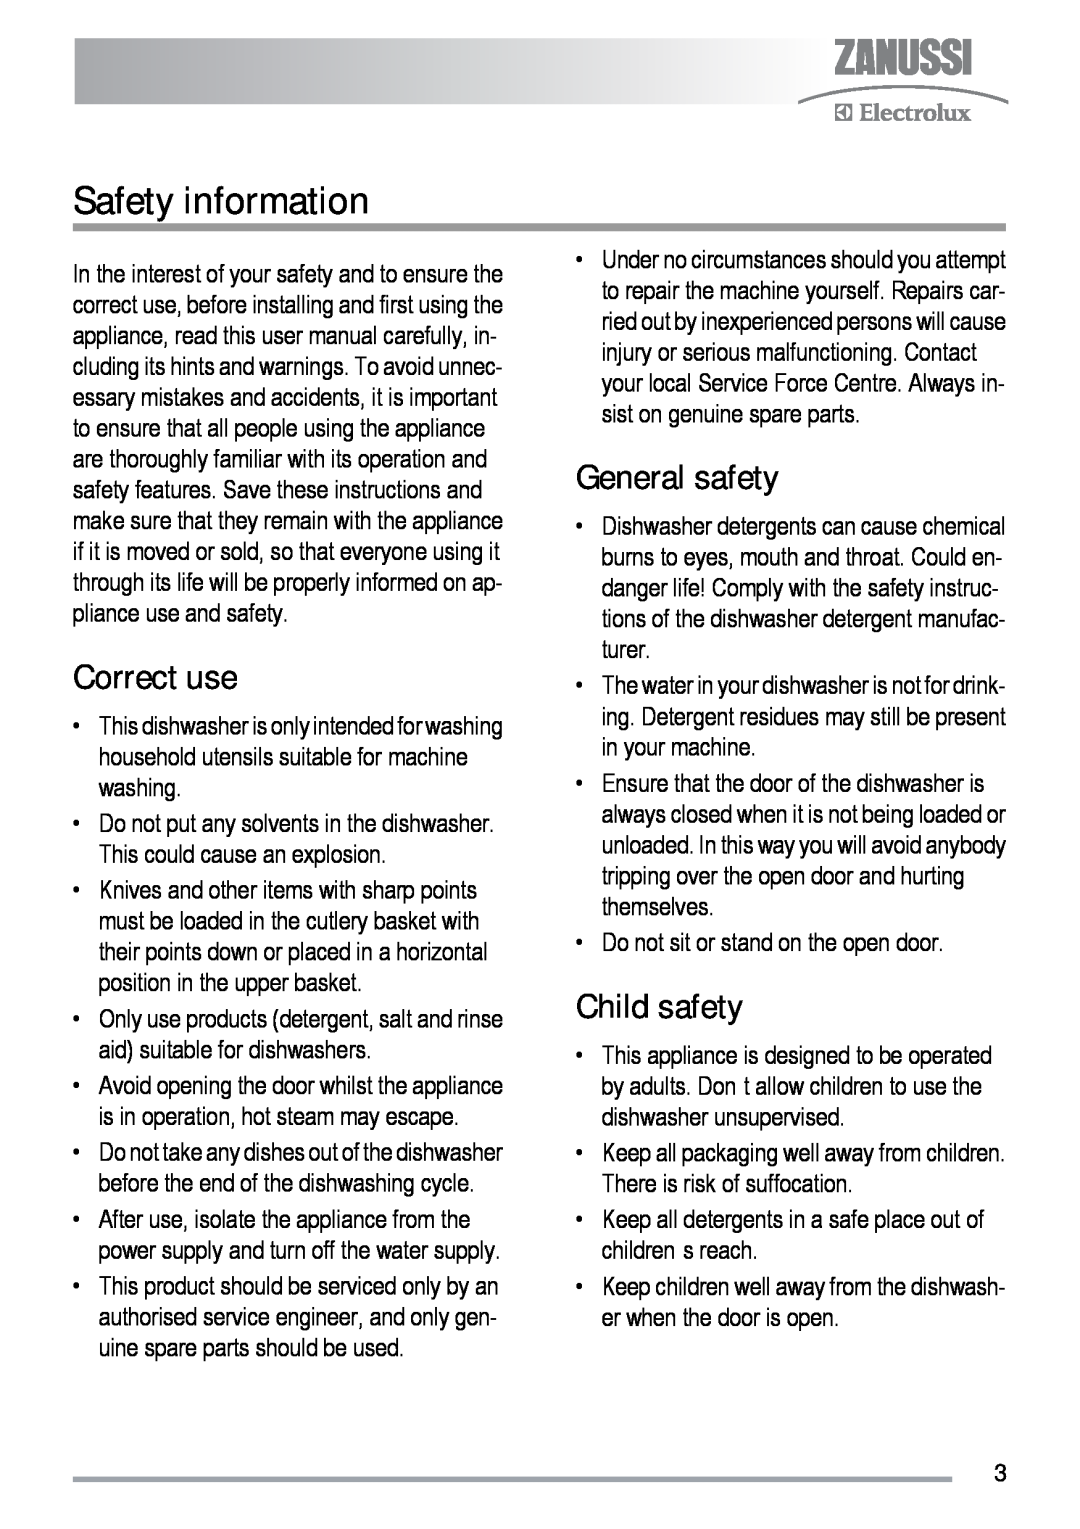 Zanussi ZDF 131 manual Safety information, Correct use, General safety, Child safety 